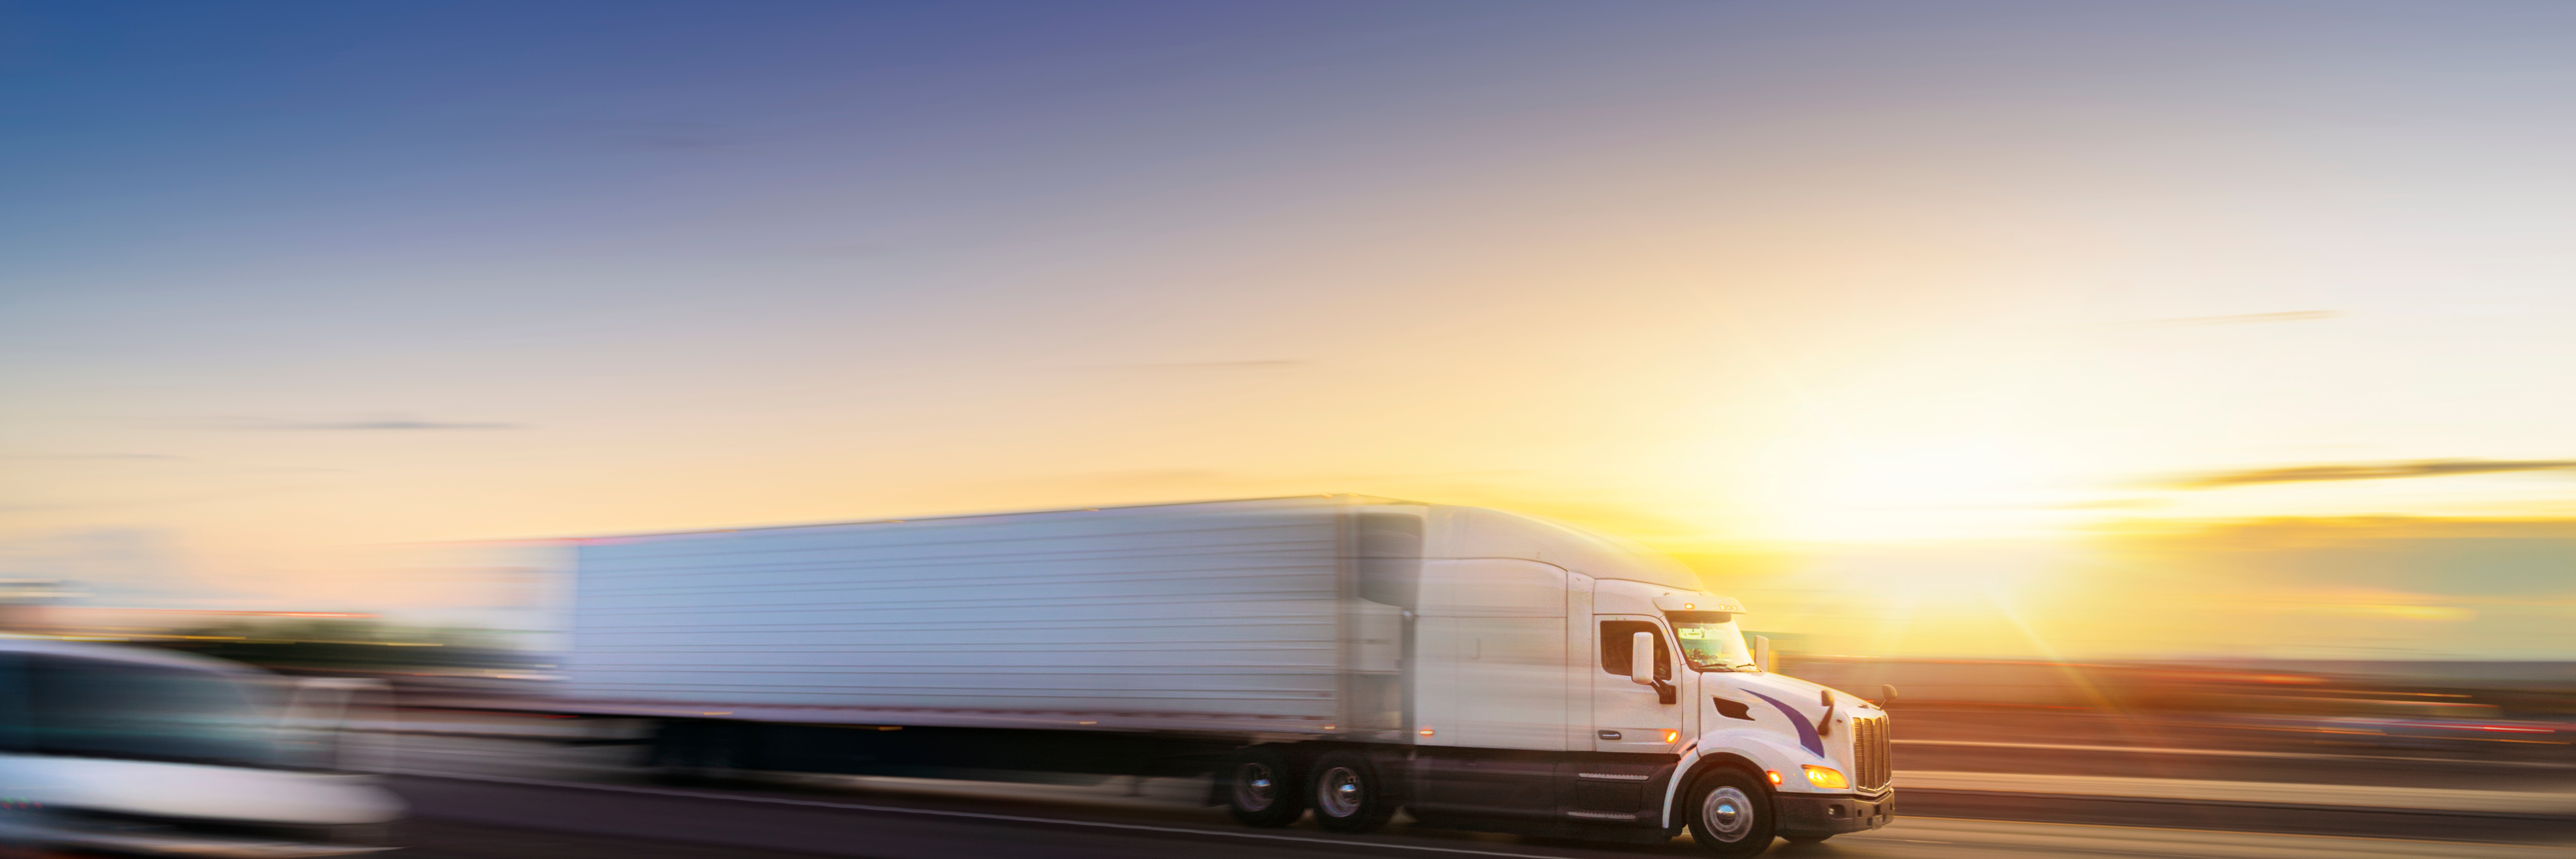 commercial transportation insurance for fleets, trucks, autonomous vehicles, and MaaS